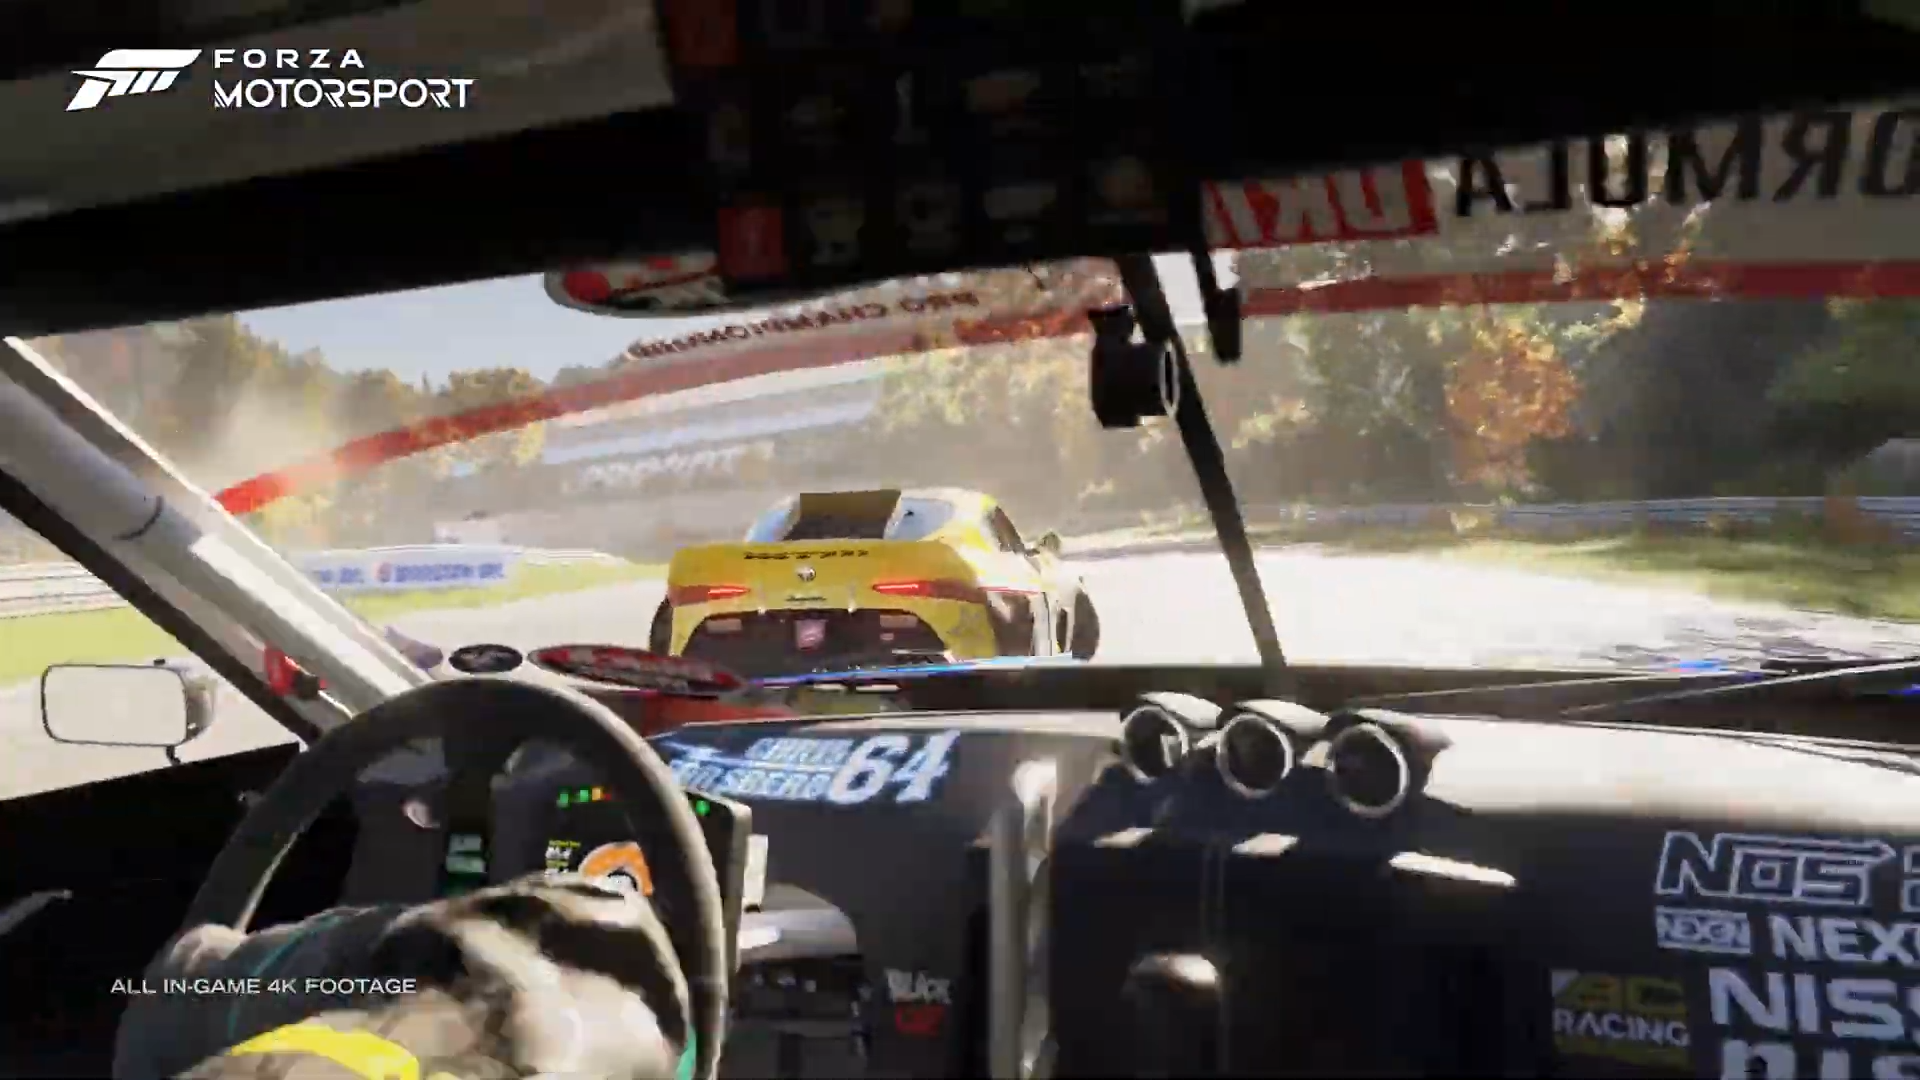 Forza Motorsport looks stunning in gameplay demo TechRadar